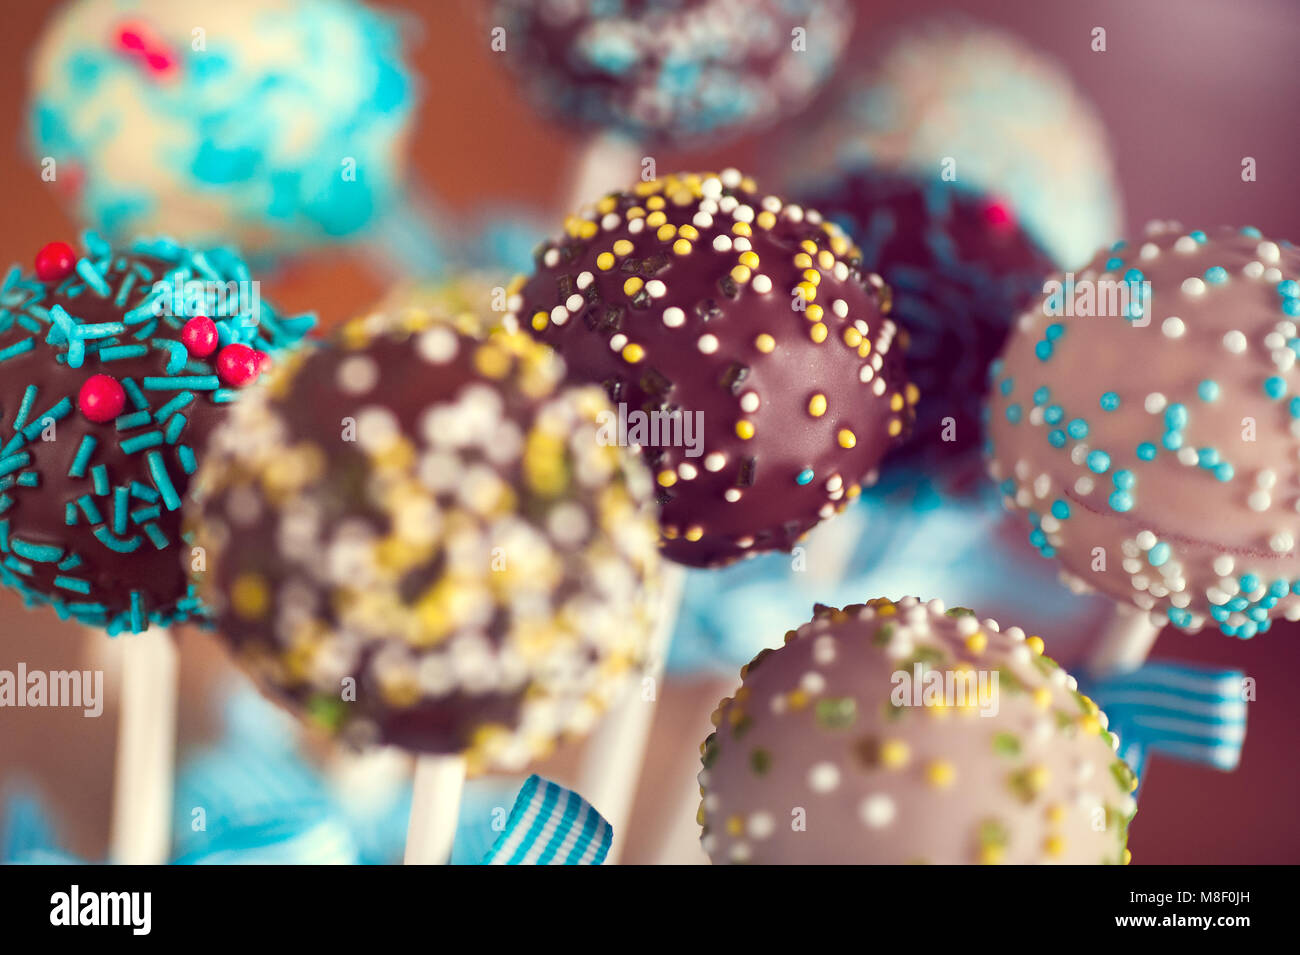 Organizado cakepops con bolitas dulces preparados para comer Foto de stock